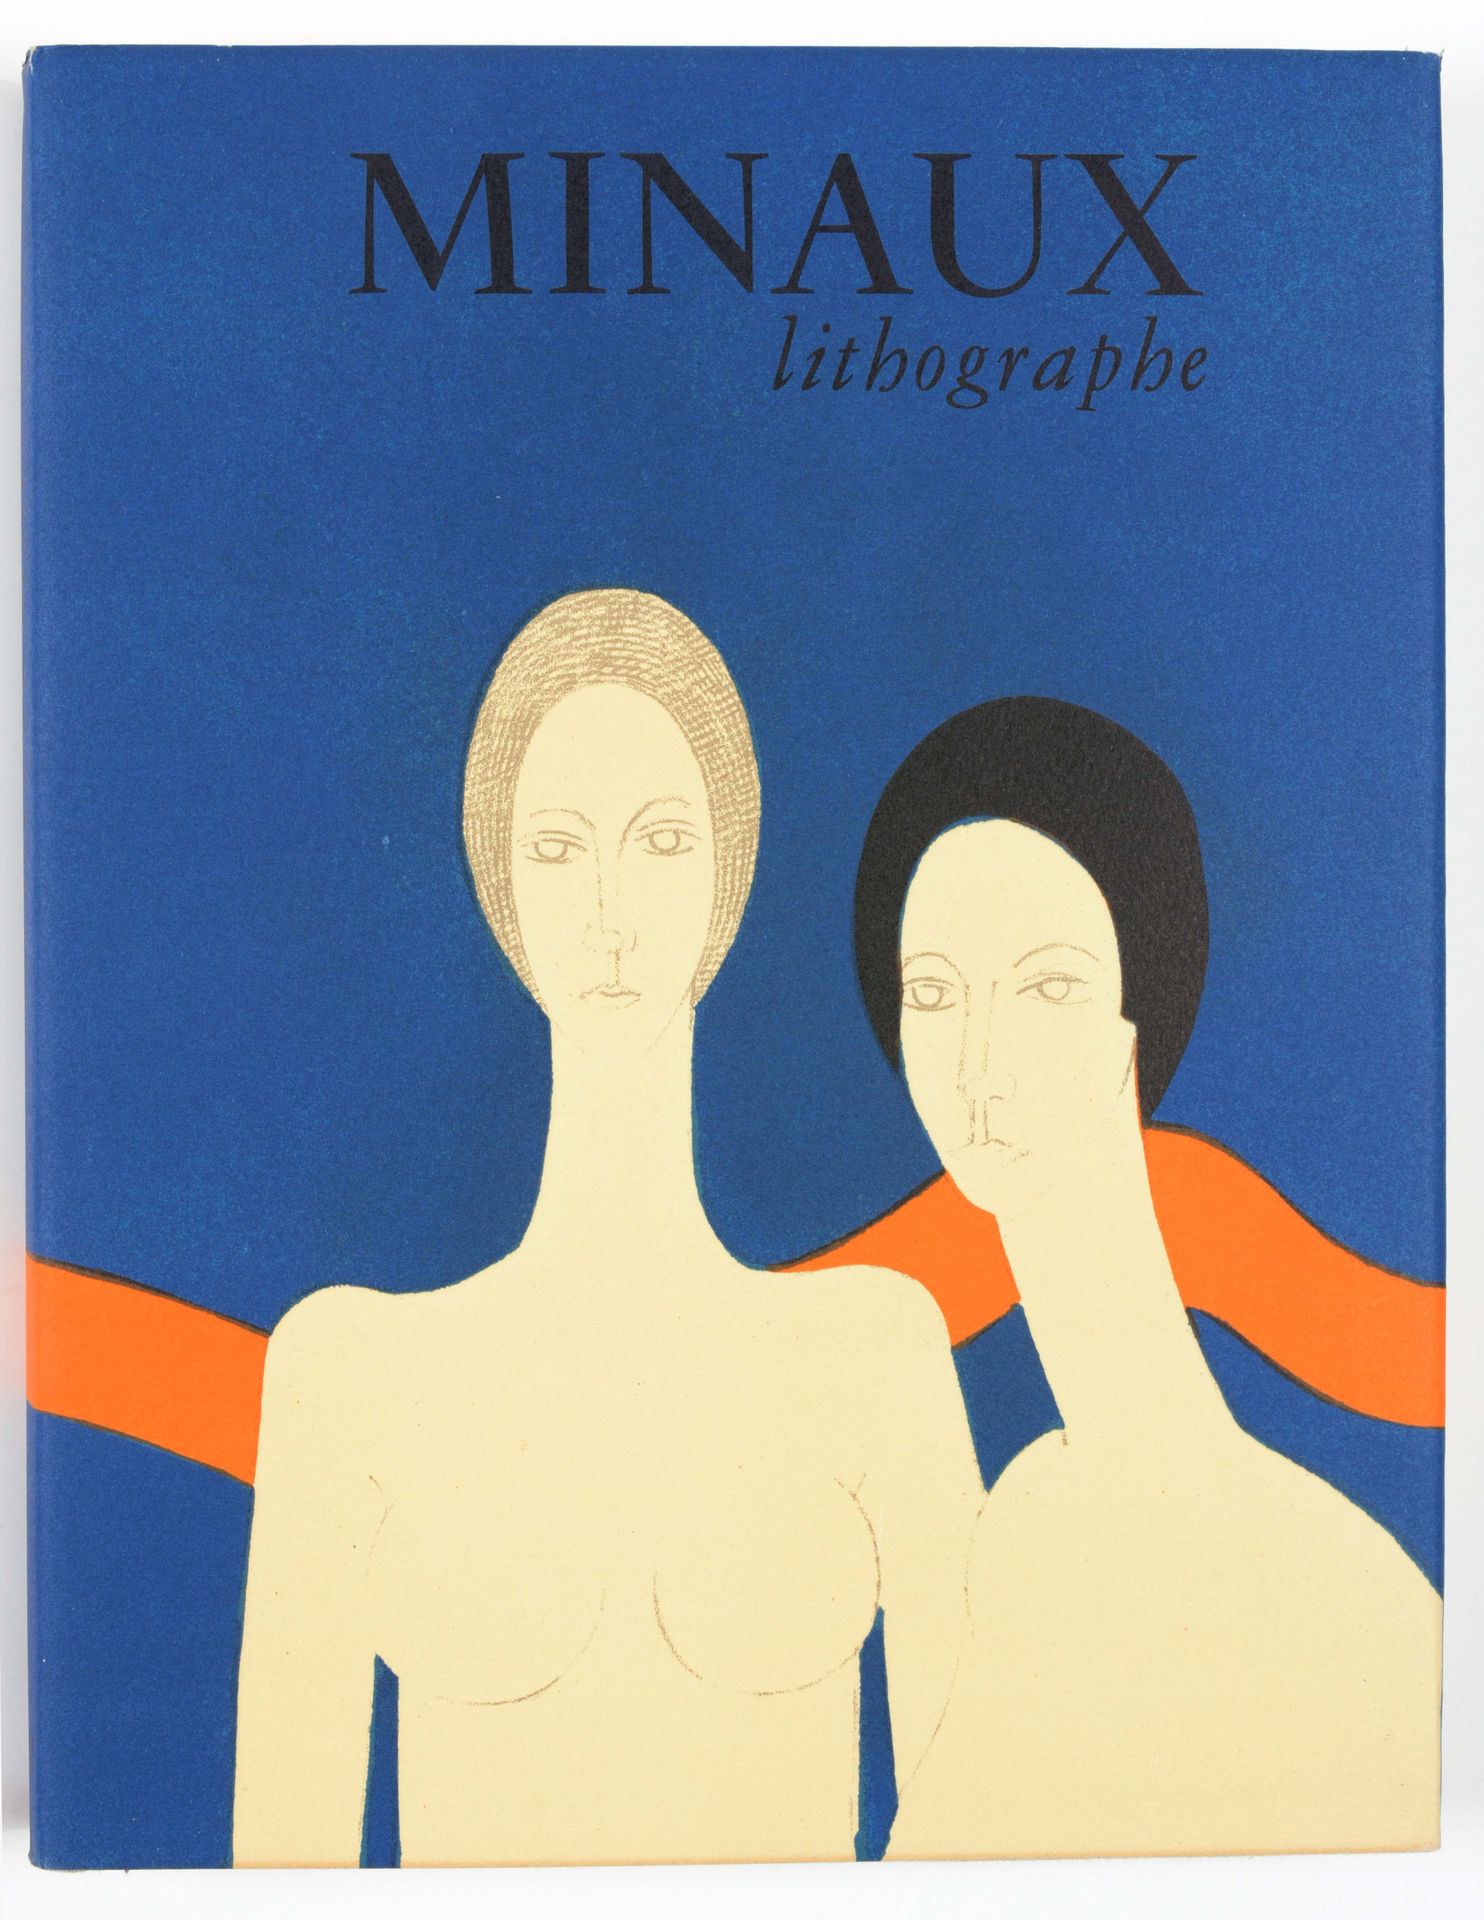 [MINAUX] SORLIER, Charles Minaux lithographe 1948-1973

Gr. In-4°, 207 pp, orné &hellip;